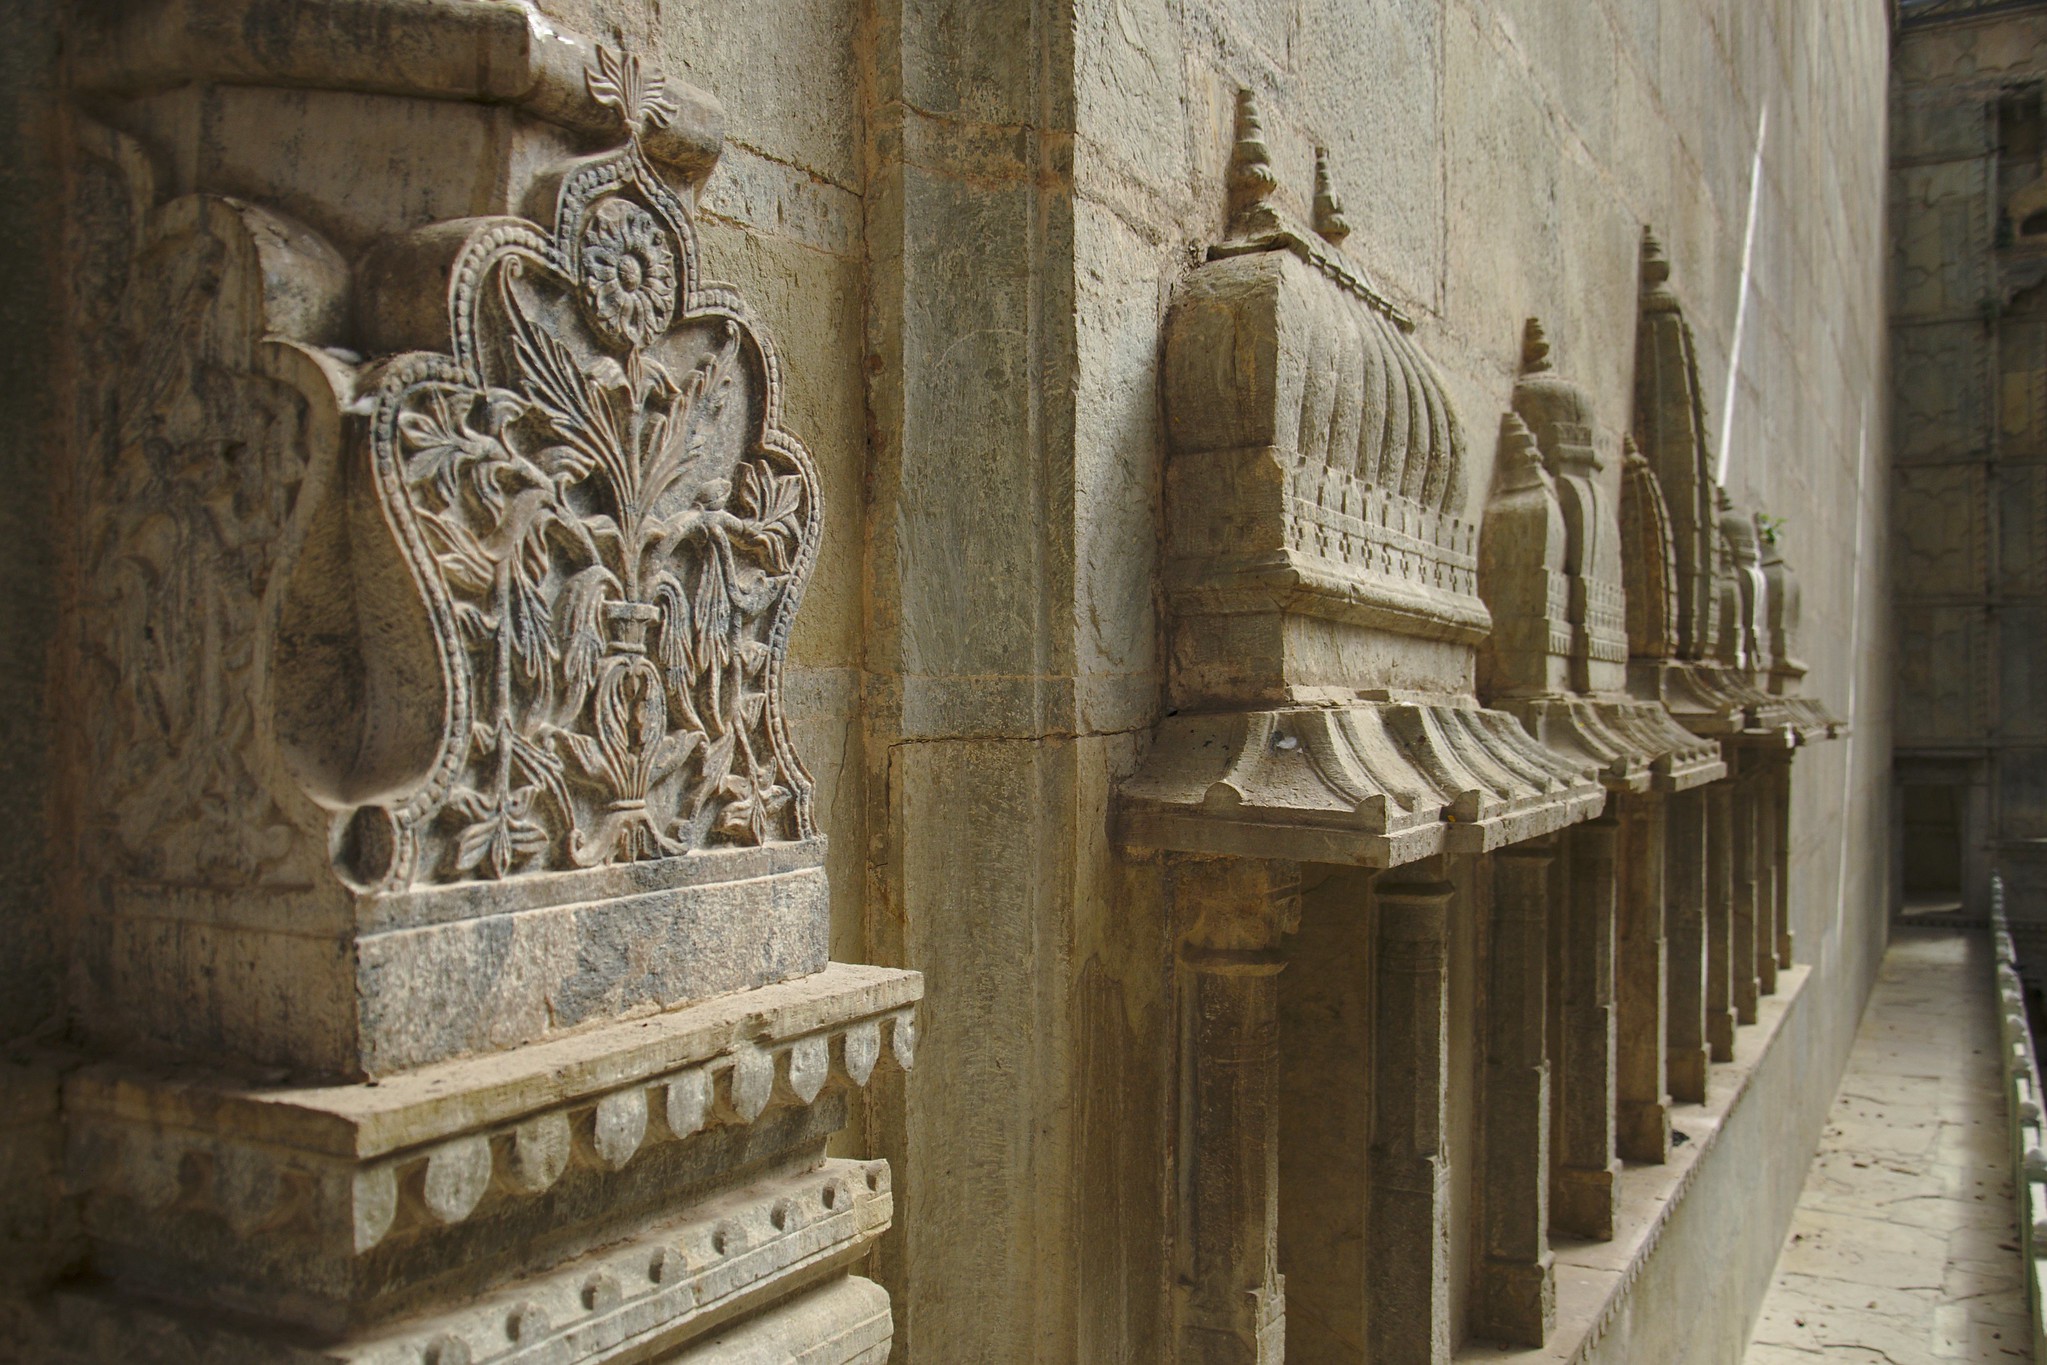 Raniji ki Baori mini temples carved